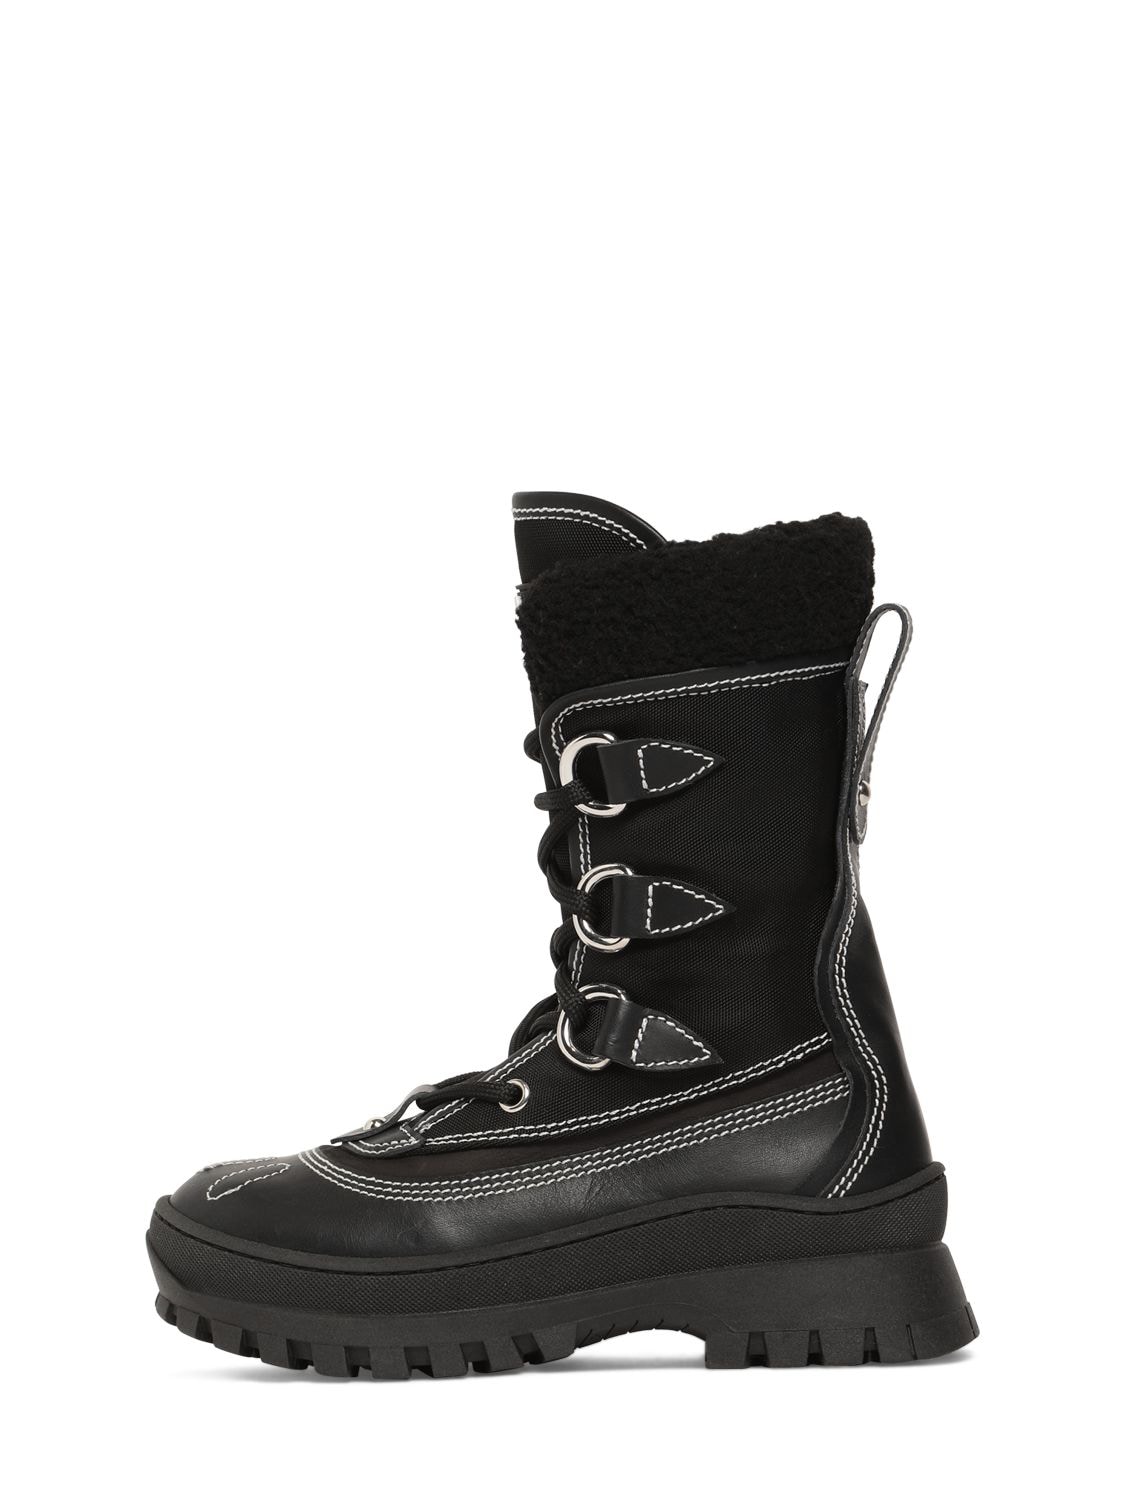 Dsquared2 Kids logo-plaque leather Chelsea boots - Black